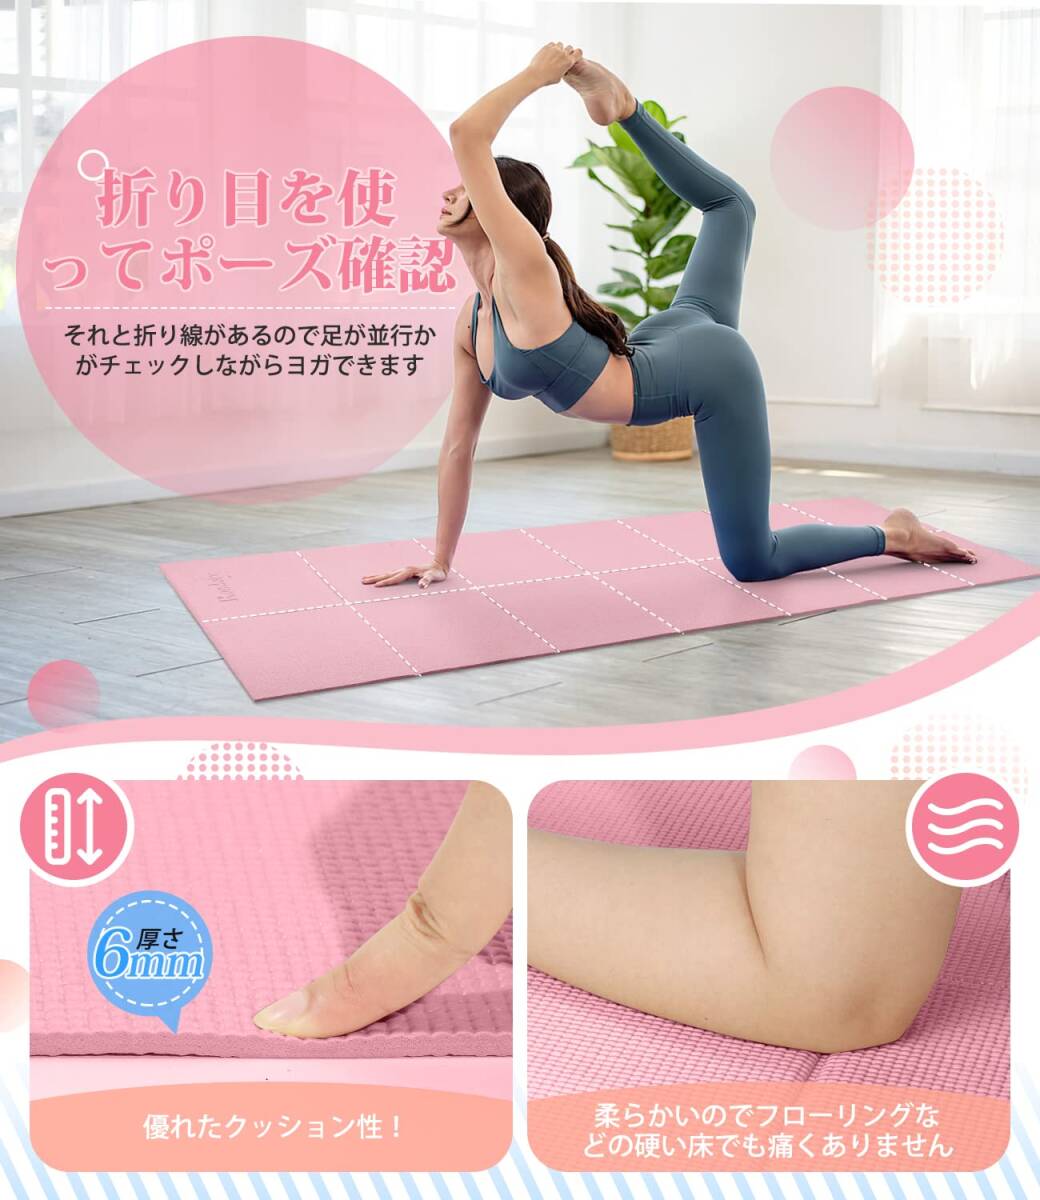  recommendation * yoga mat folding 6mm durability eminent compact design 